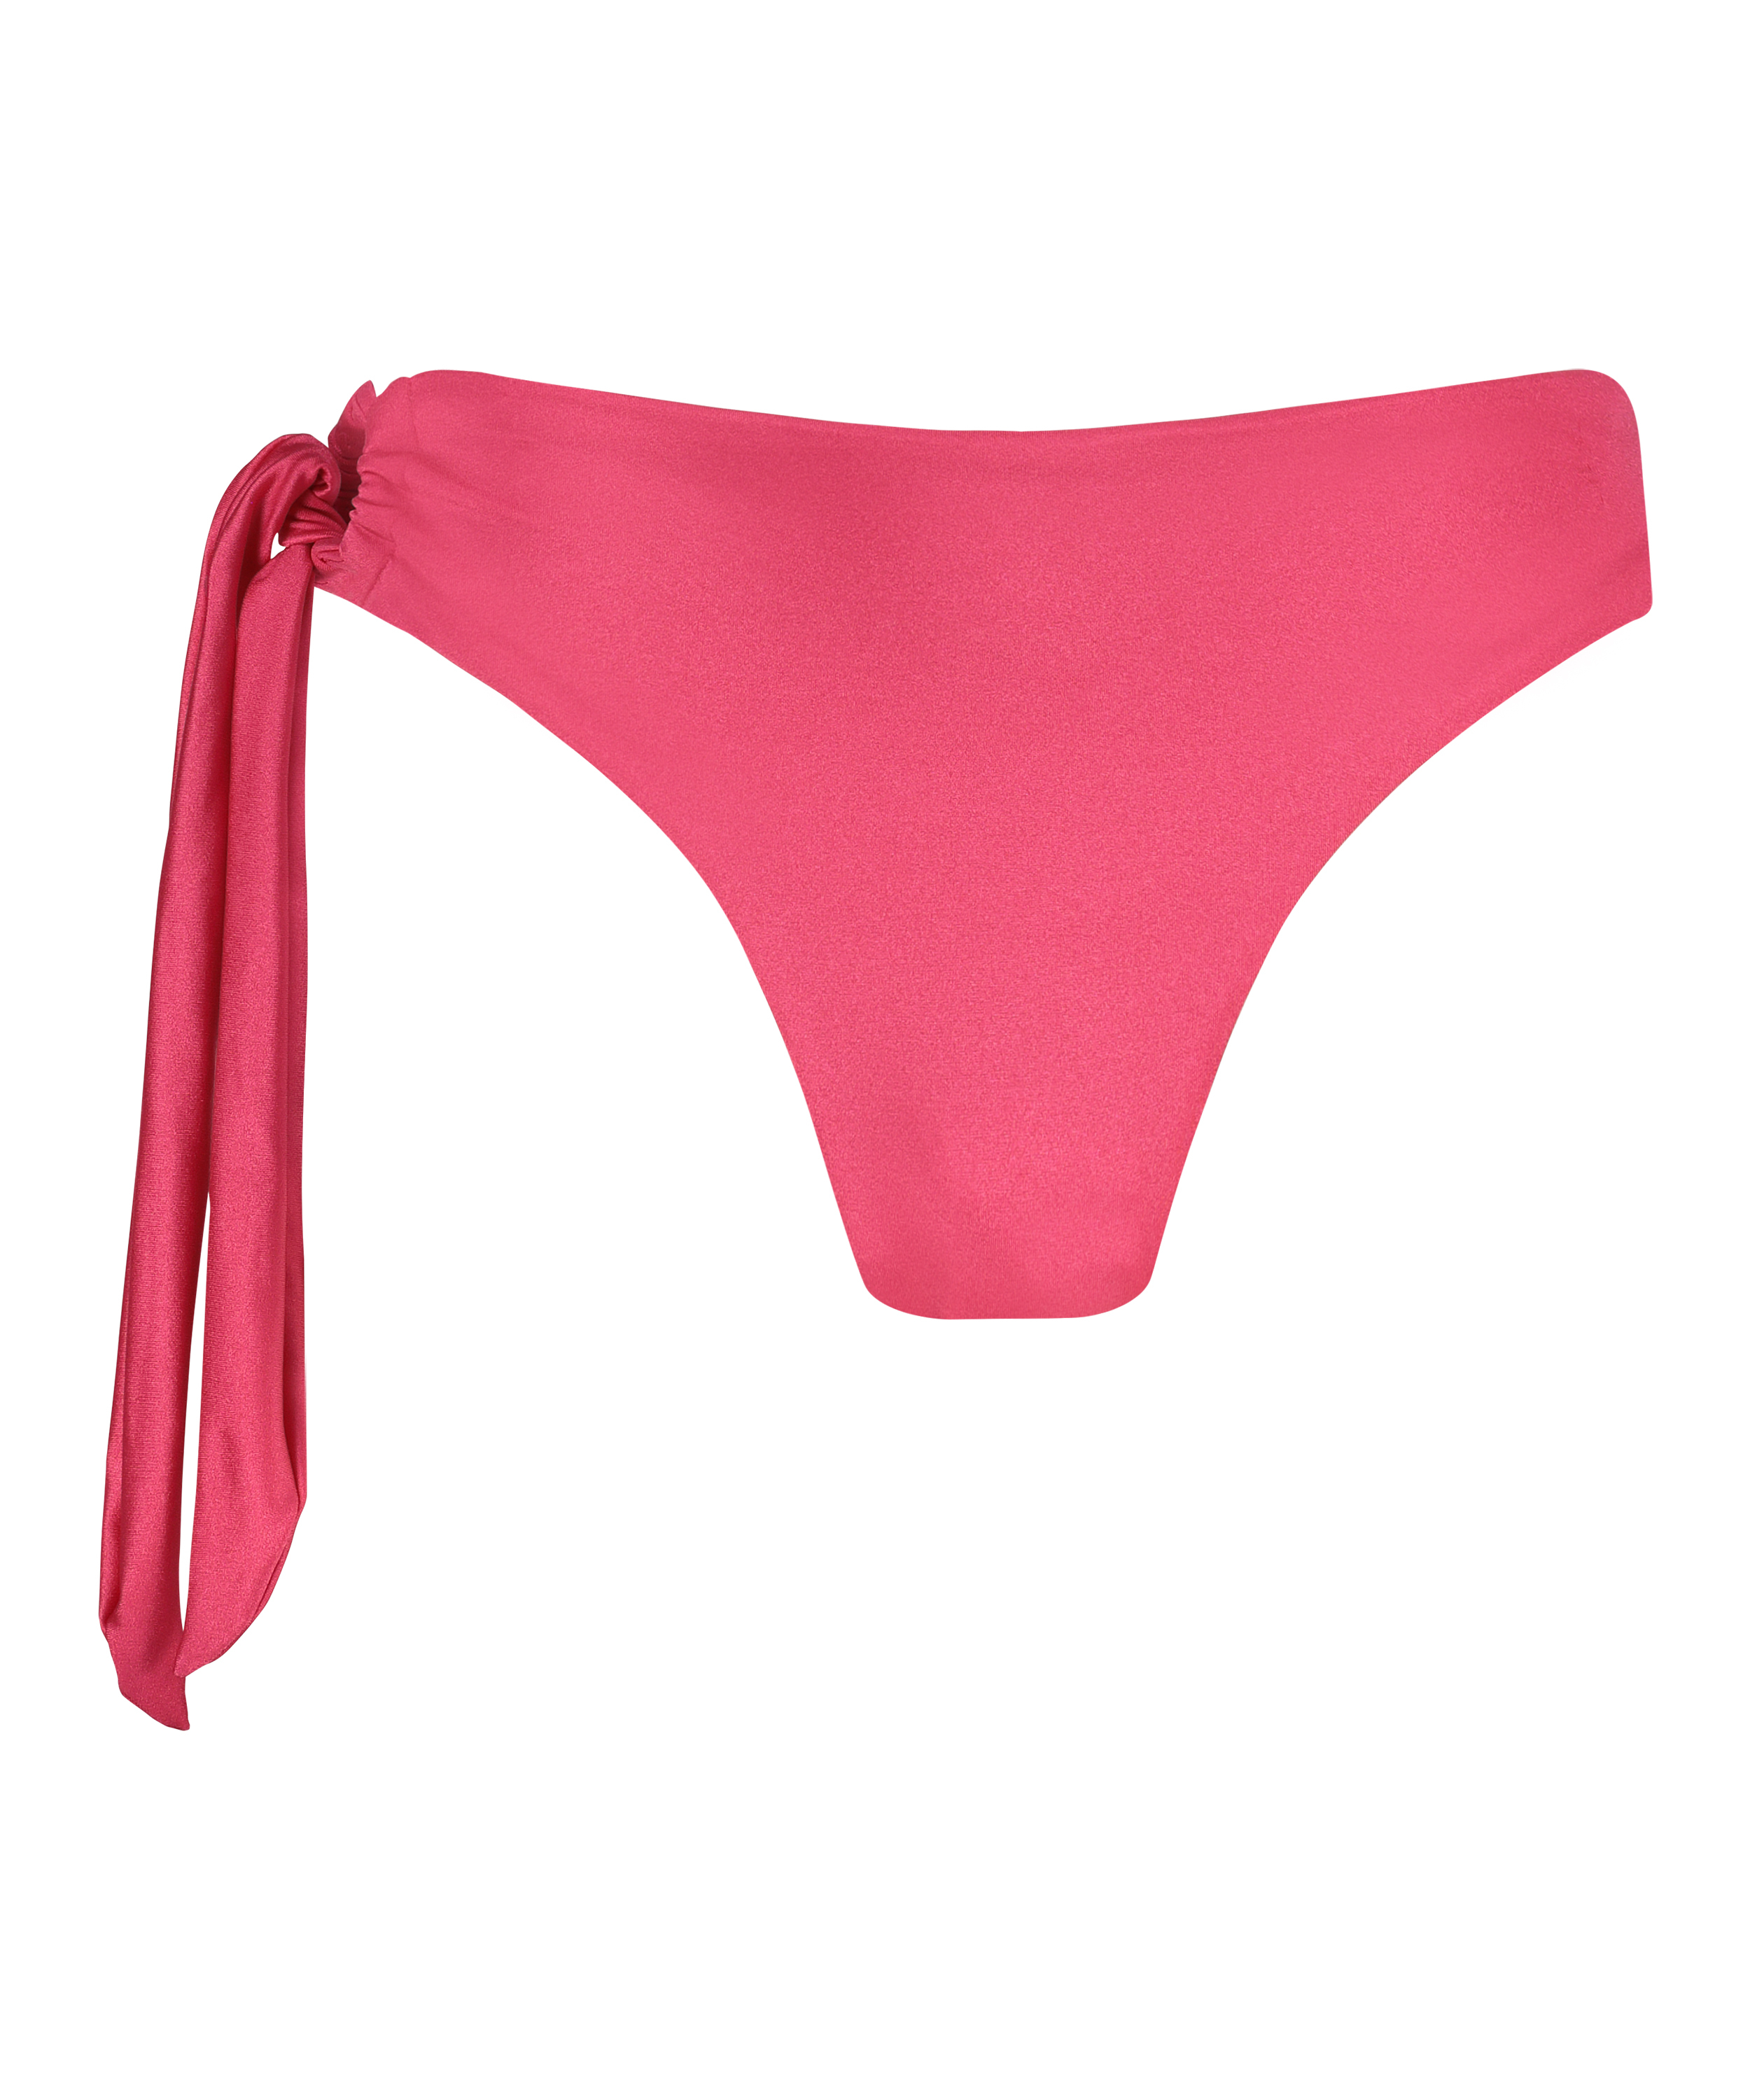 Bikinitrusse Grenada, pink, main